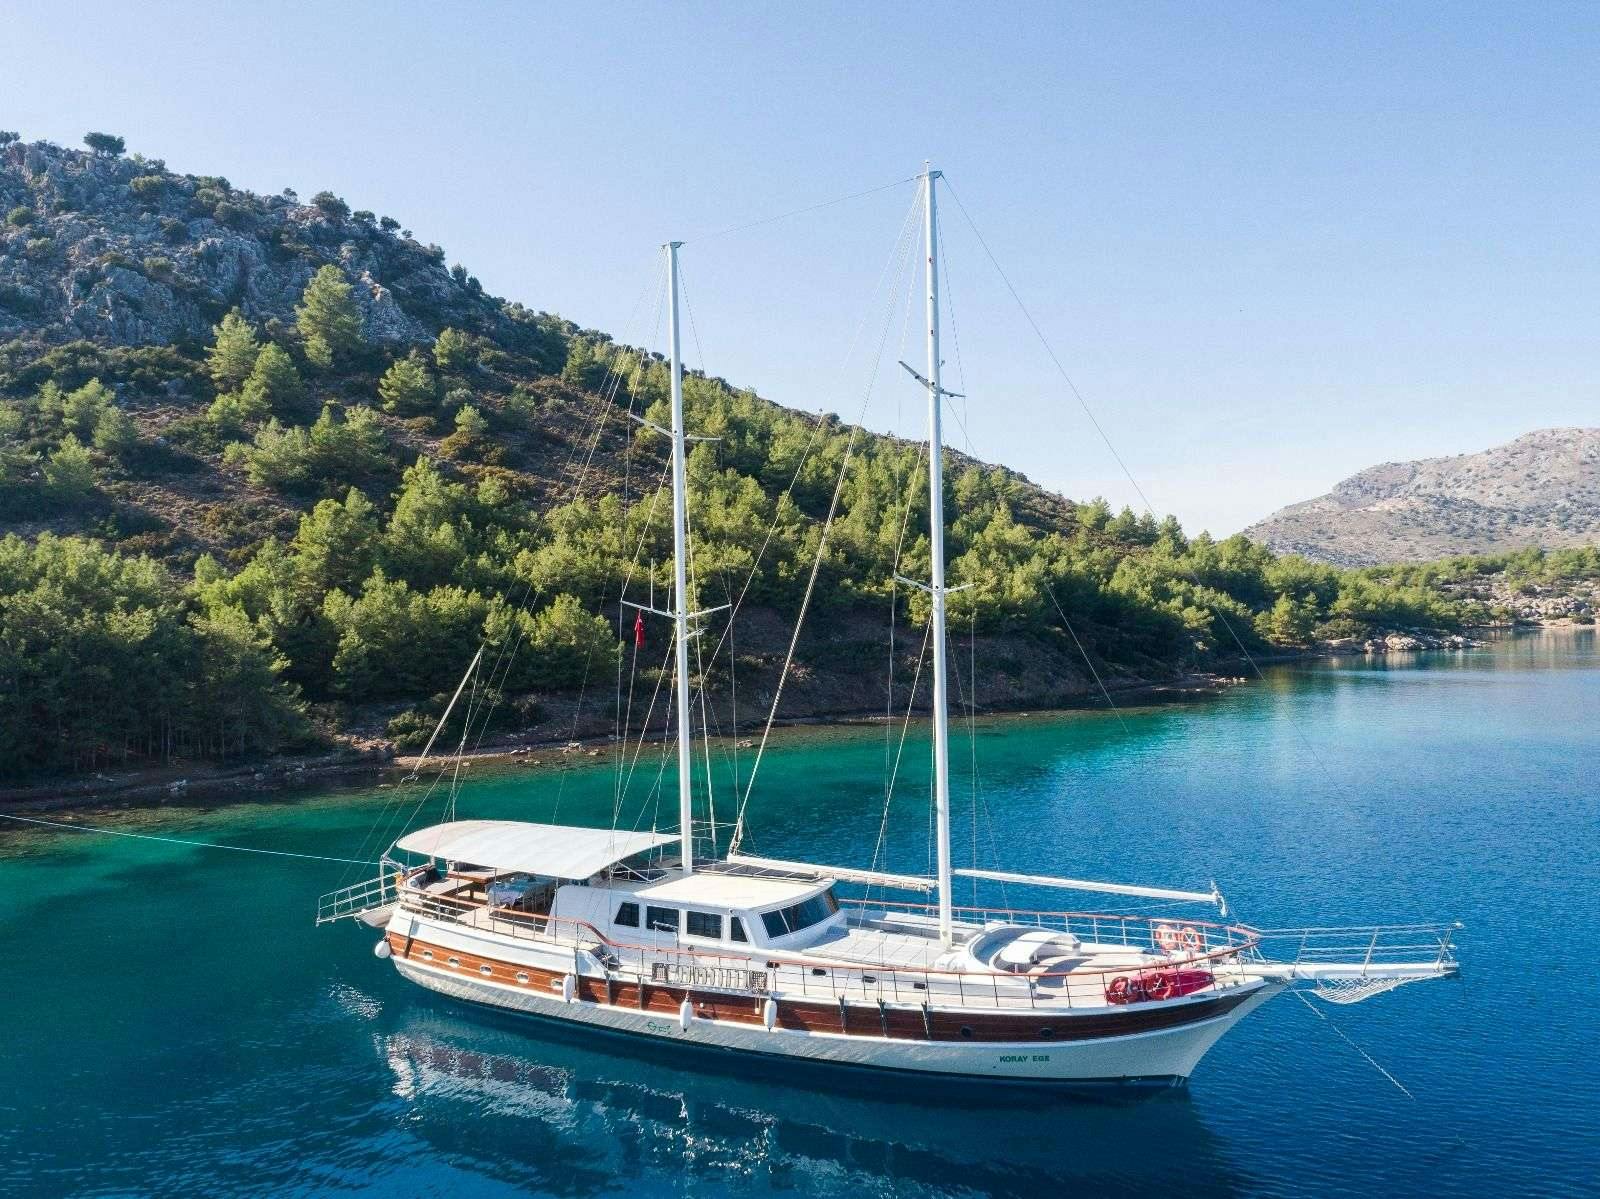 koray ege - Catamaran Charter Saint Vincent and the Grenadines & Boat hire in Greece & Turkey 1